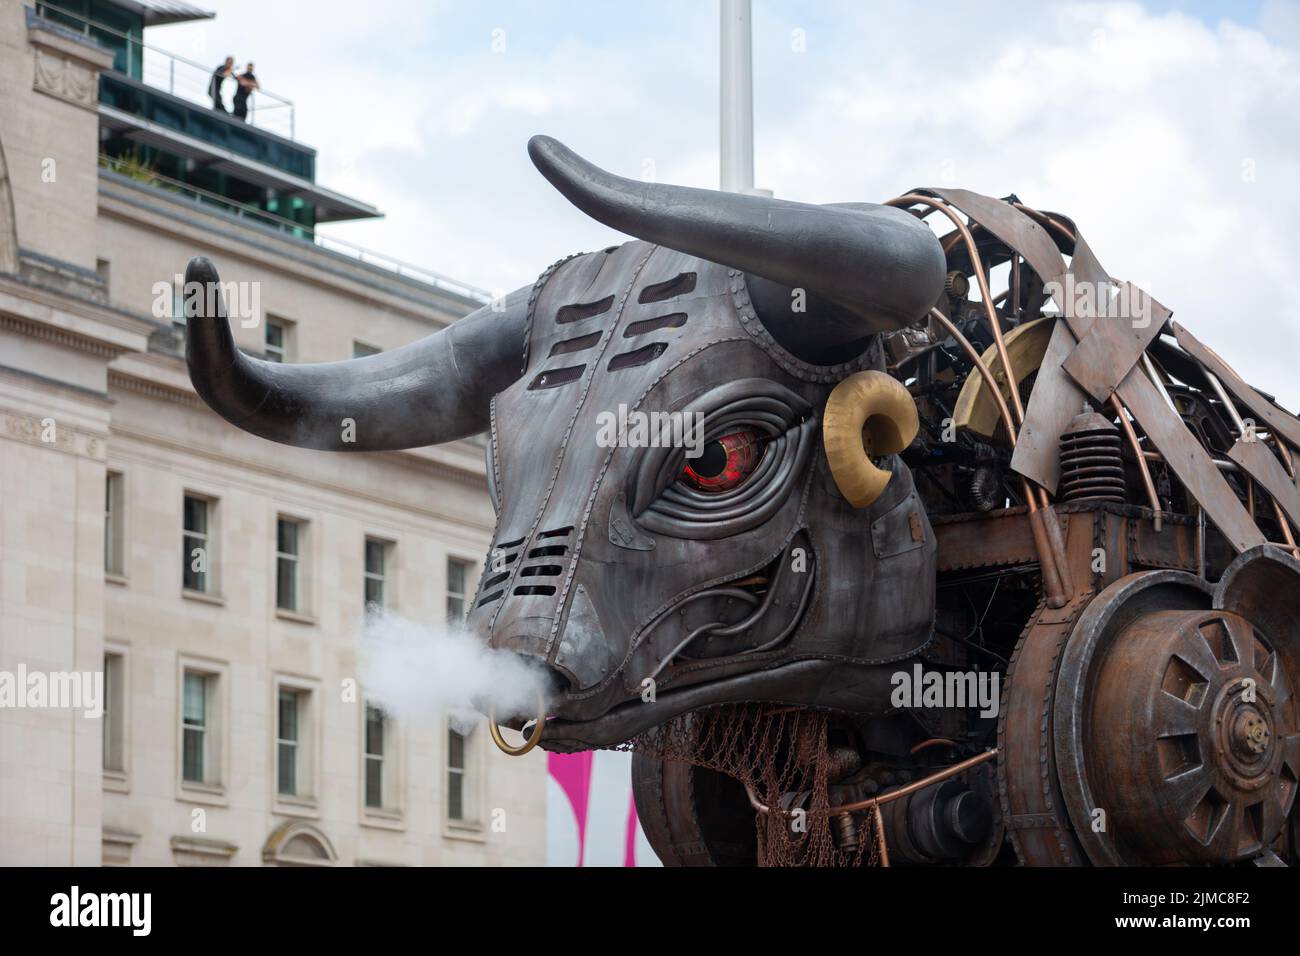 The Raging Bull - The 10ft mechanical bull used in the 2022 Birmingham Commonwealth Games, Birmingham UK Stock Photo